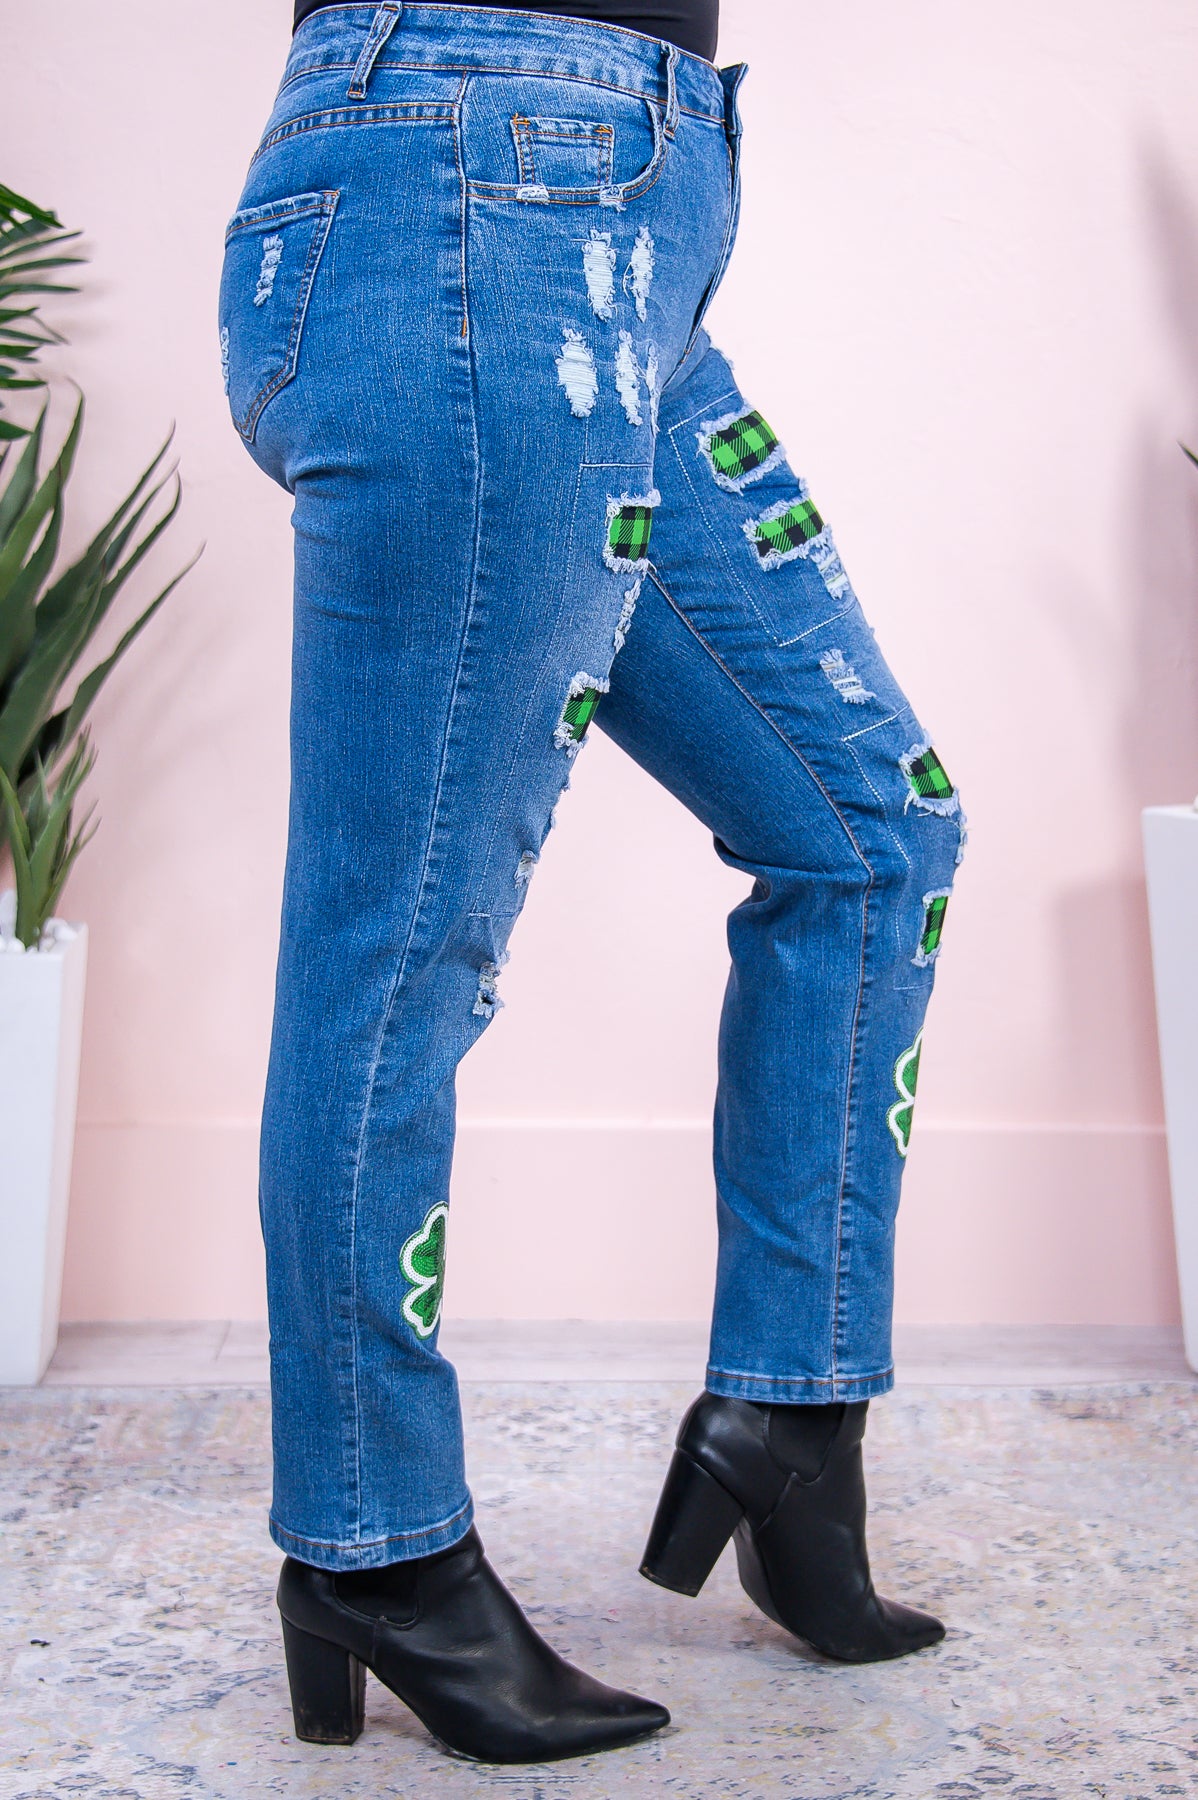 Ireland Medium Denim/Green/Black Checkered/Clover Jeans - K1098DN